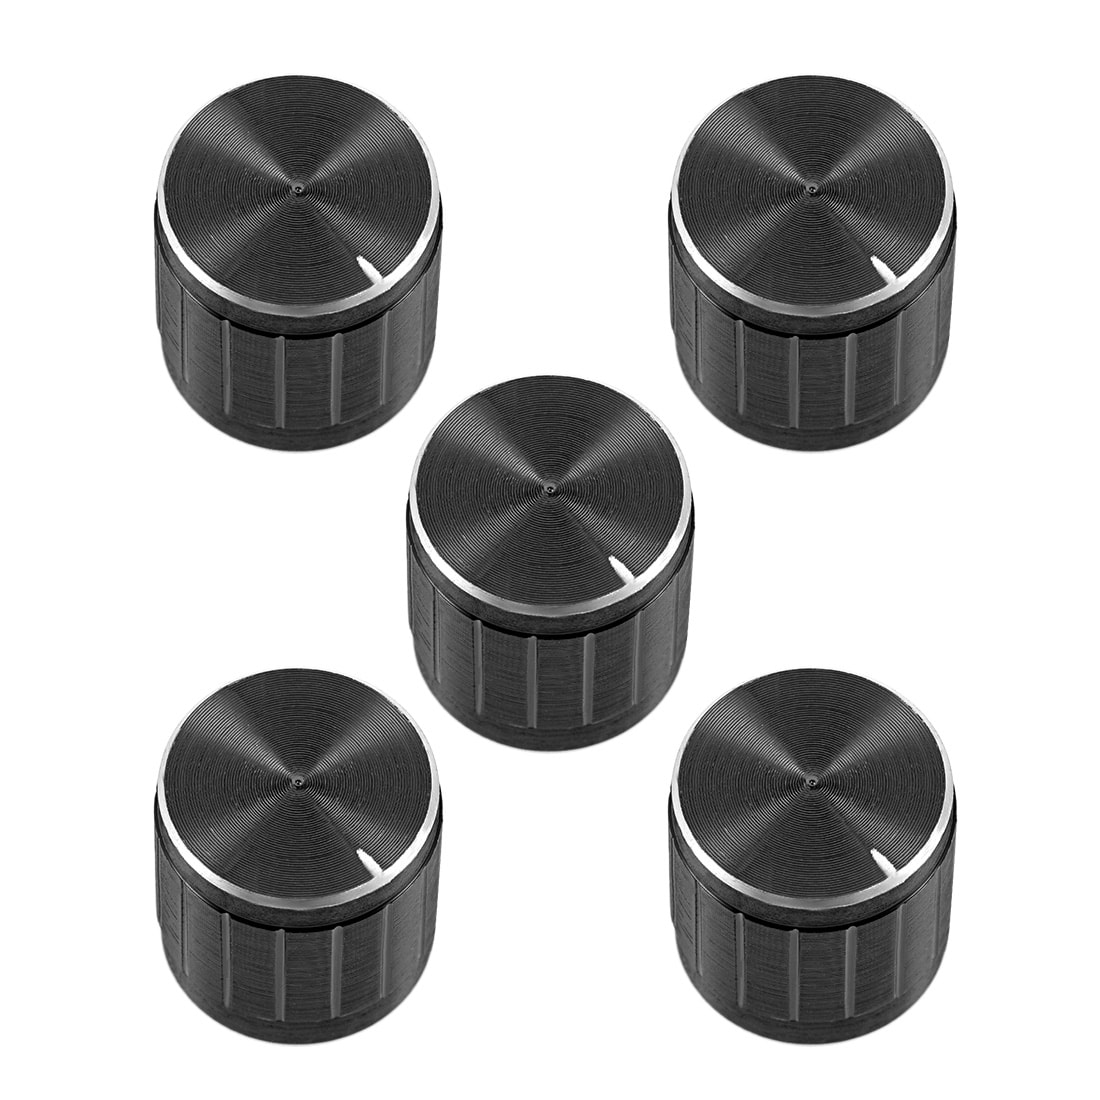 uxcell 50Pcs 6mm Insert Shaft 15x17mm Plastic Potentiometer Rotary Knob Pots Black,White